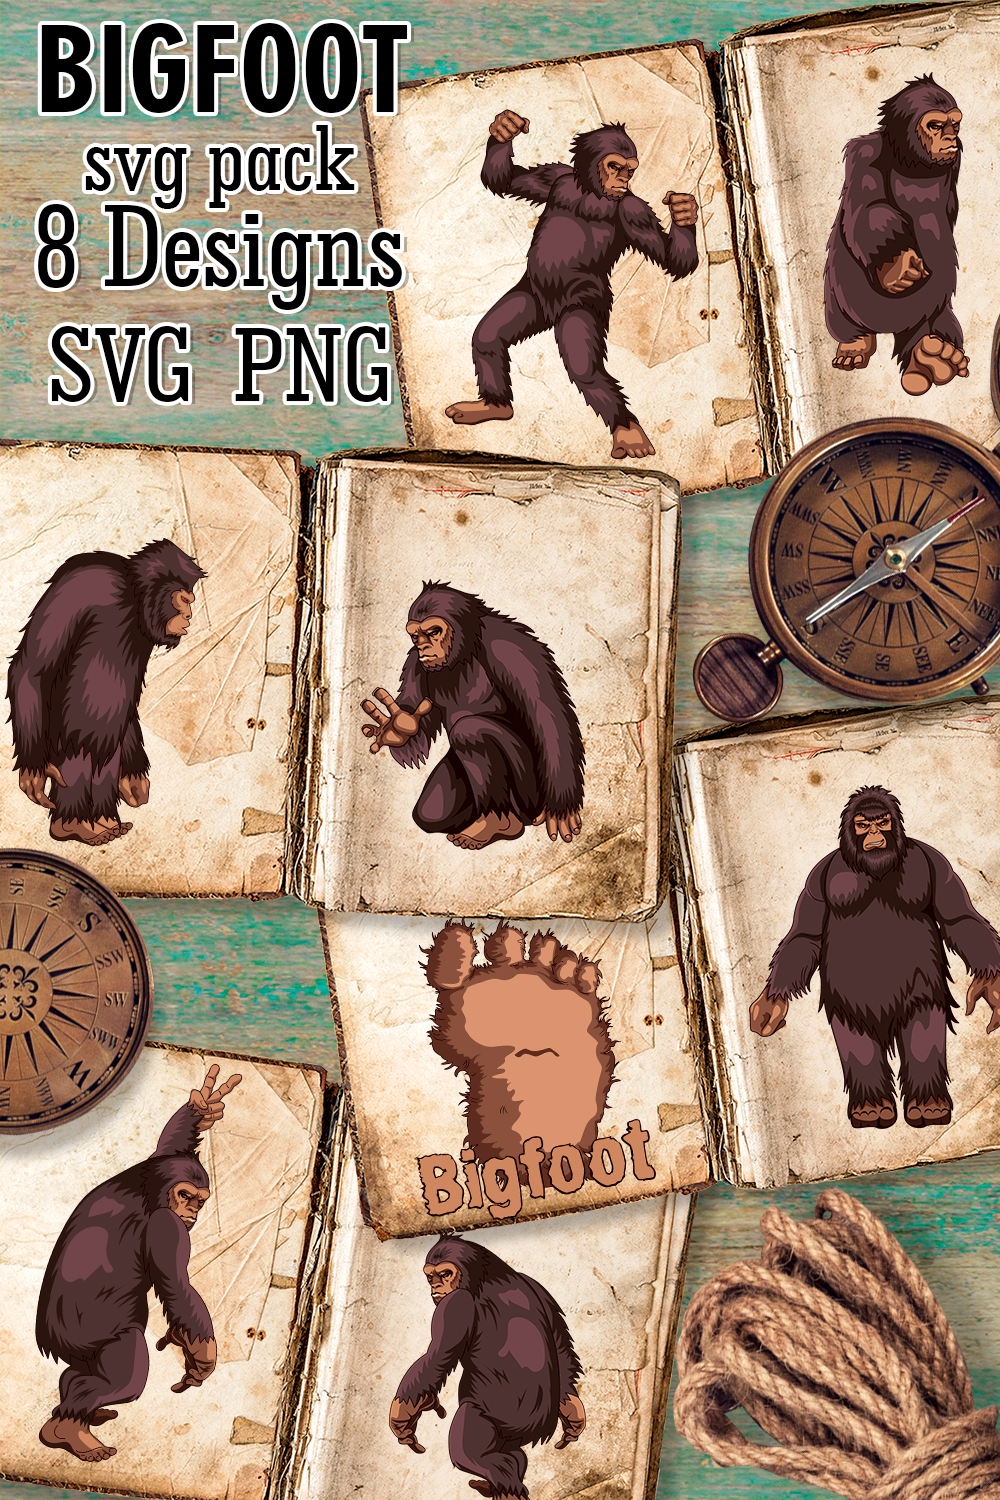 Bigfoot Svg - Pinterest.